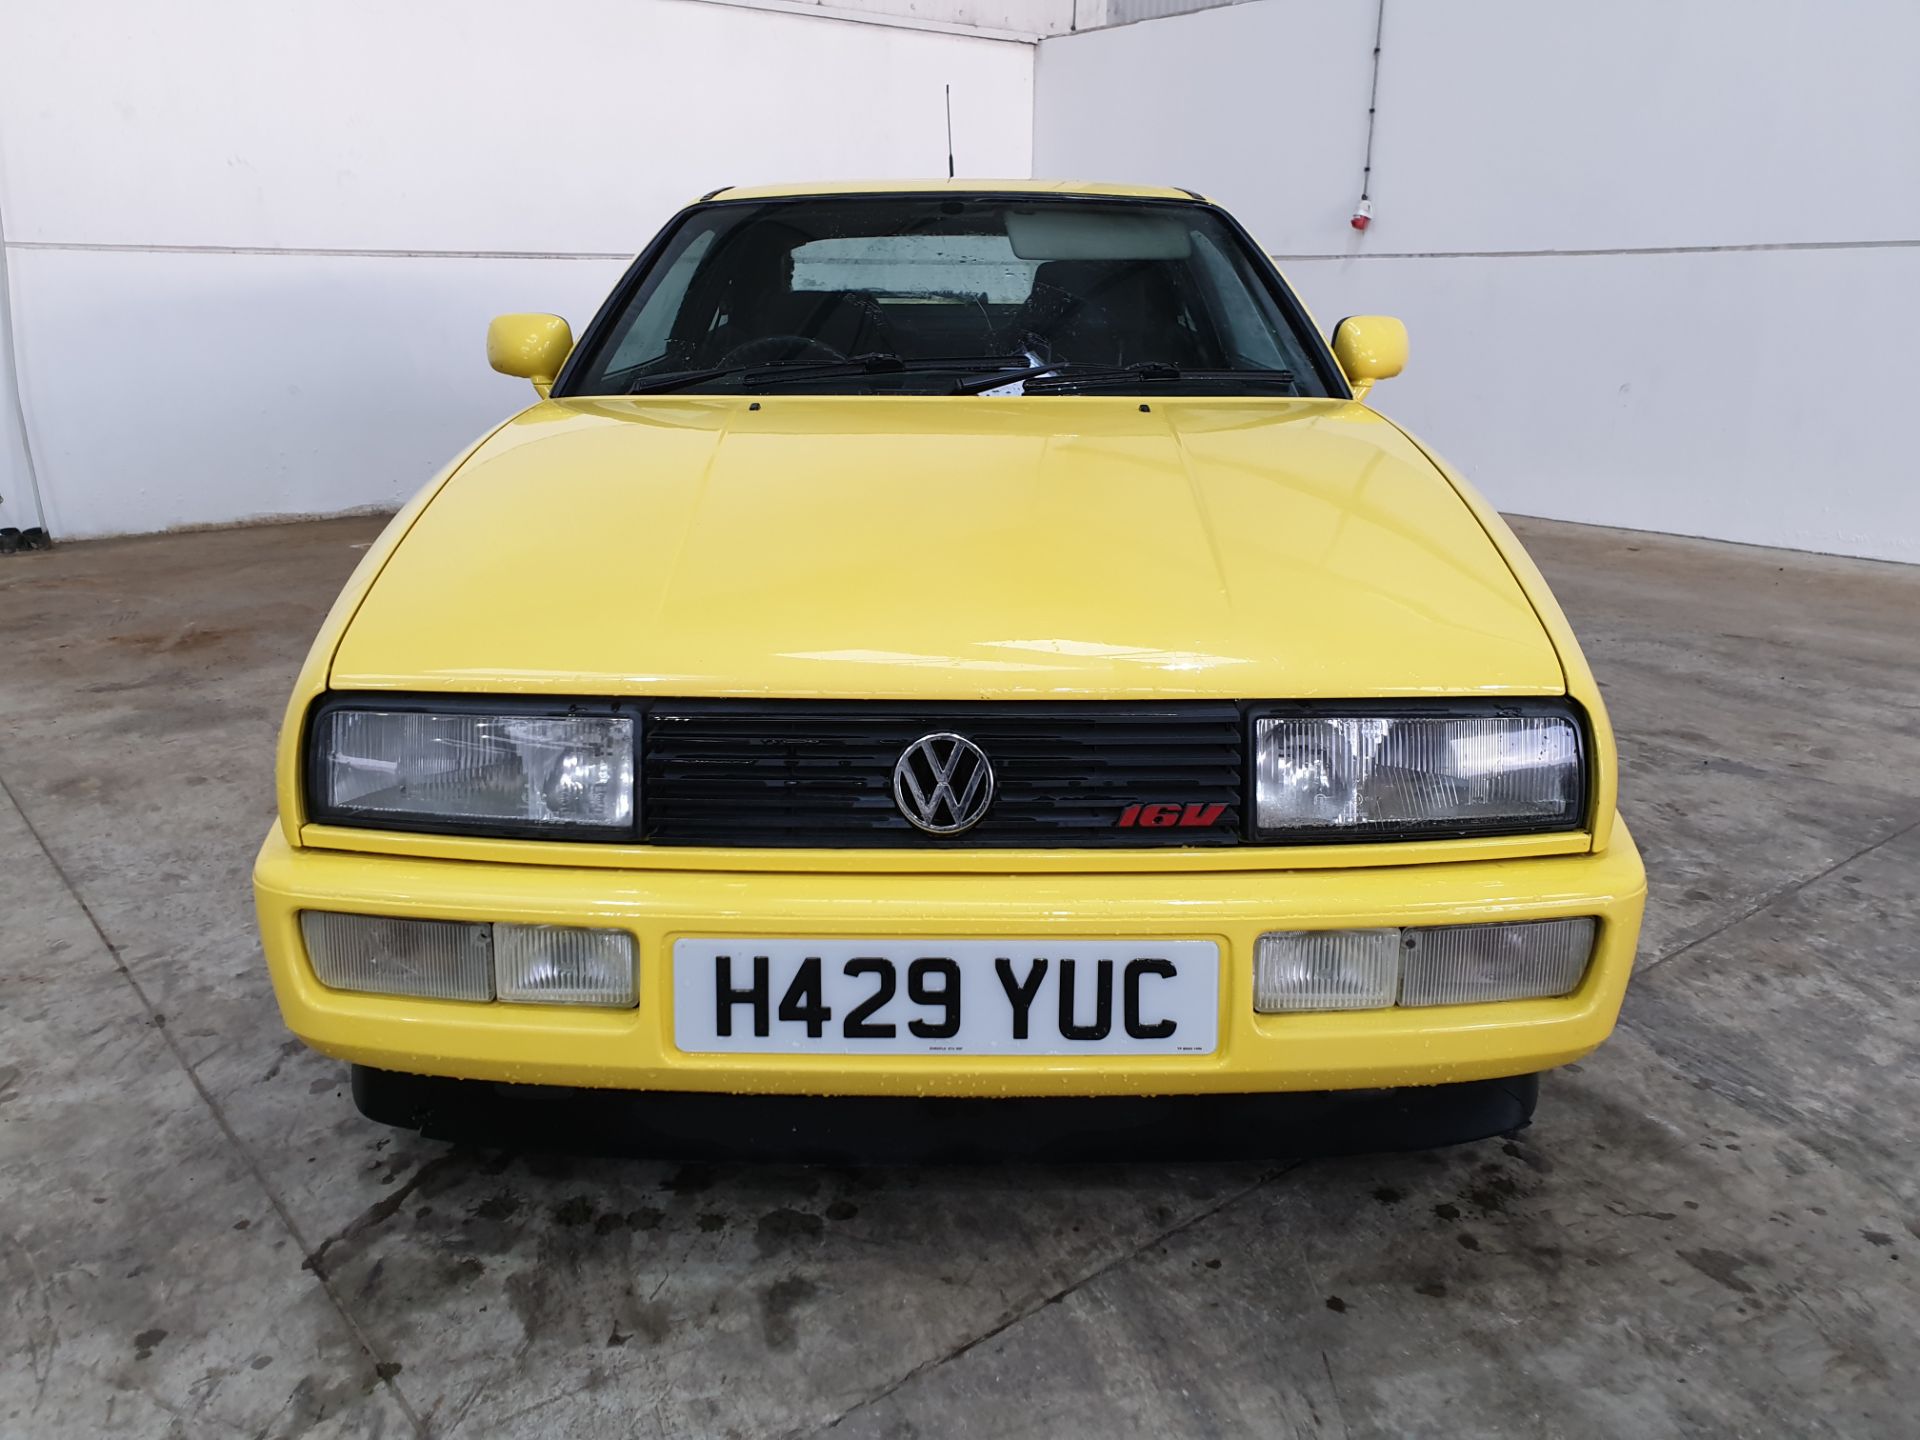 1990 VW Corrado 16v - Image 9 of 15